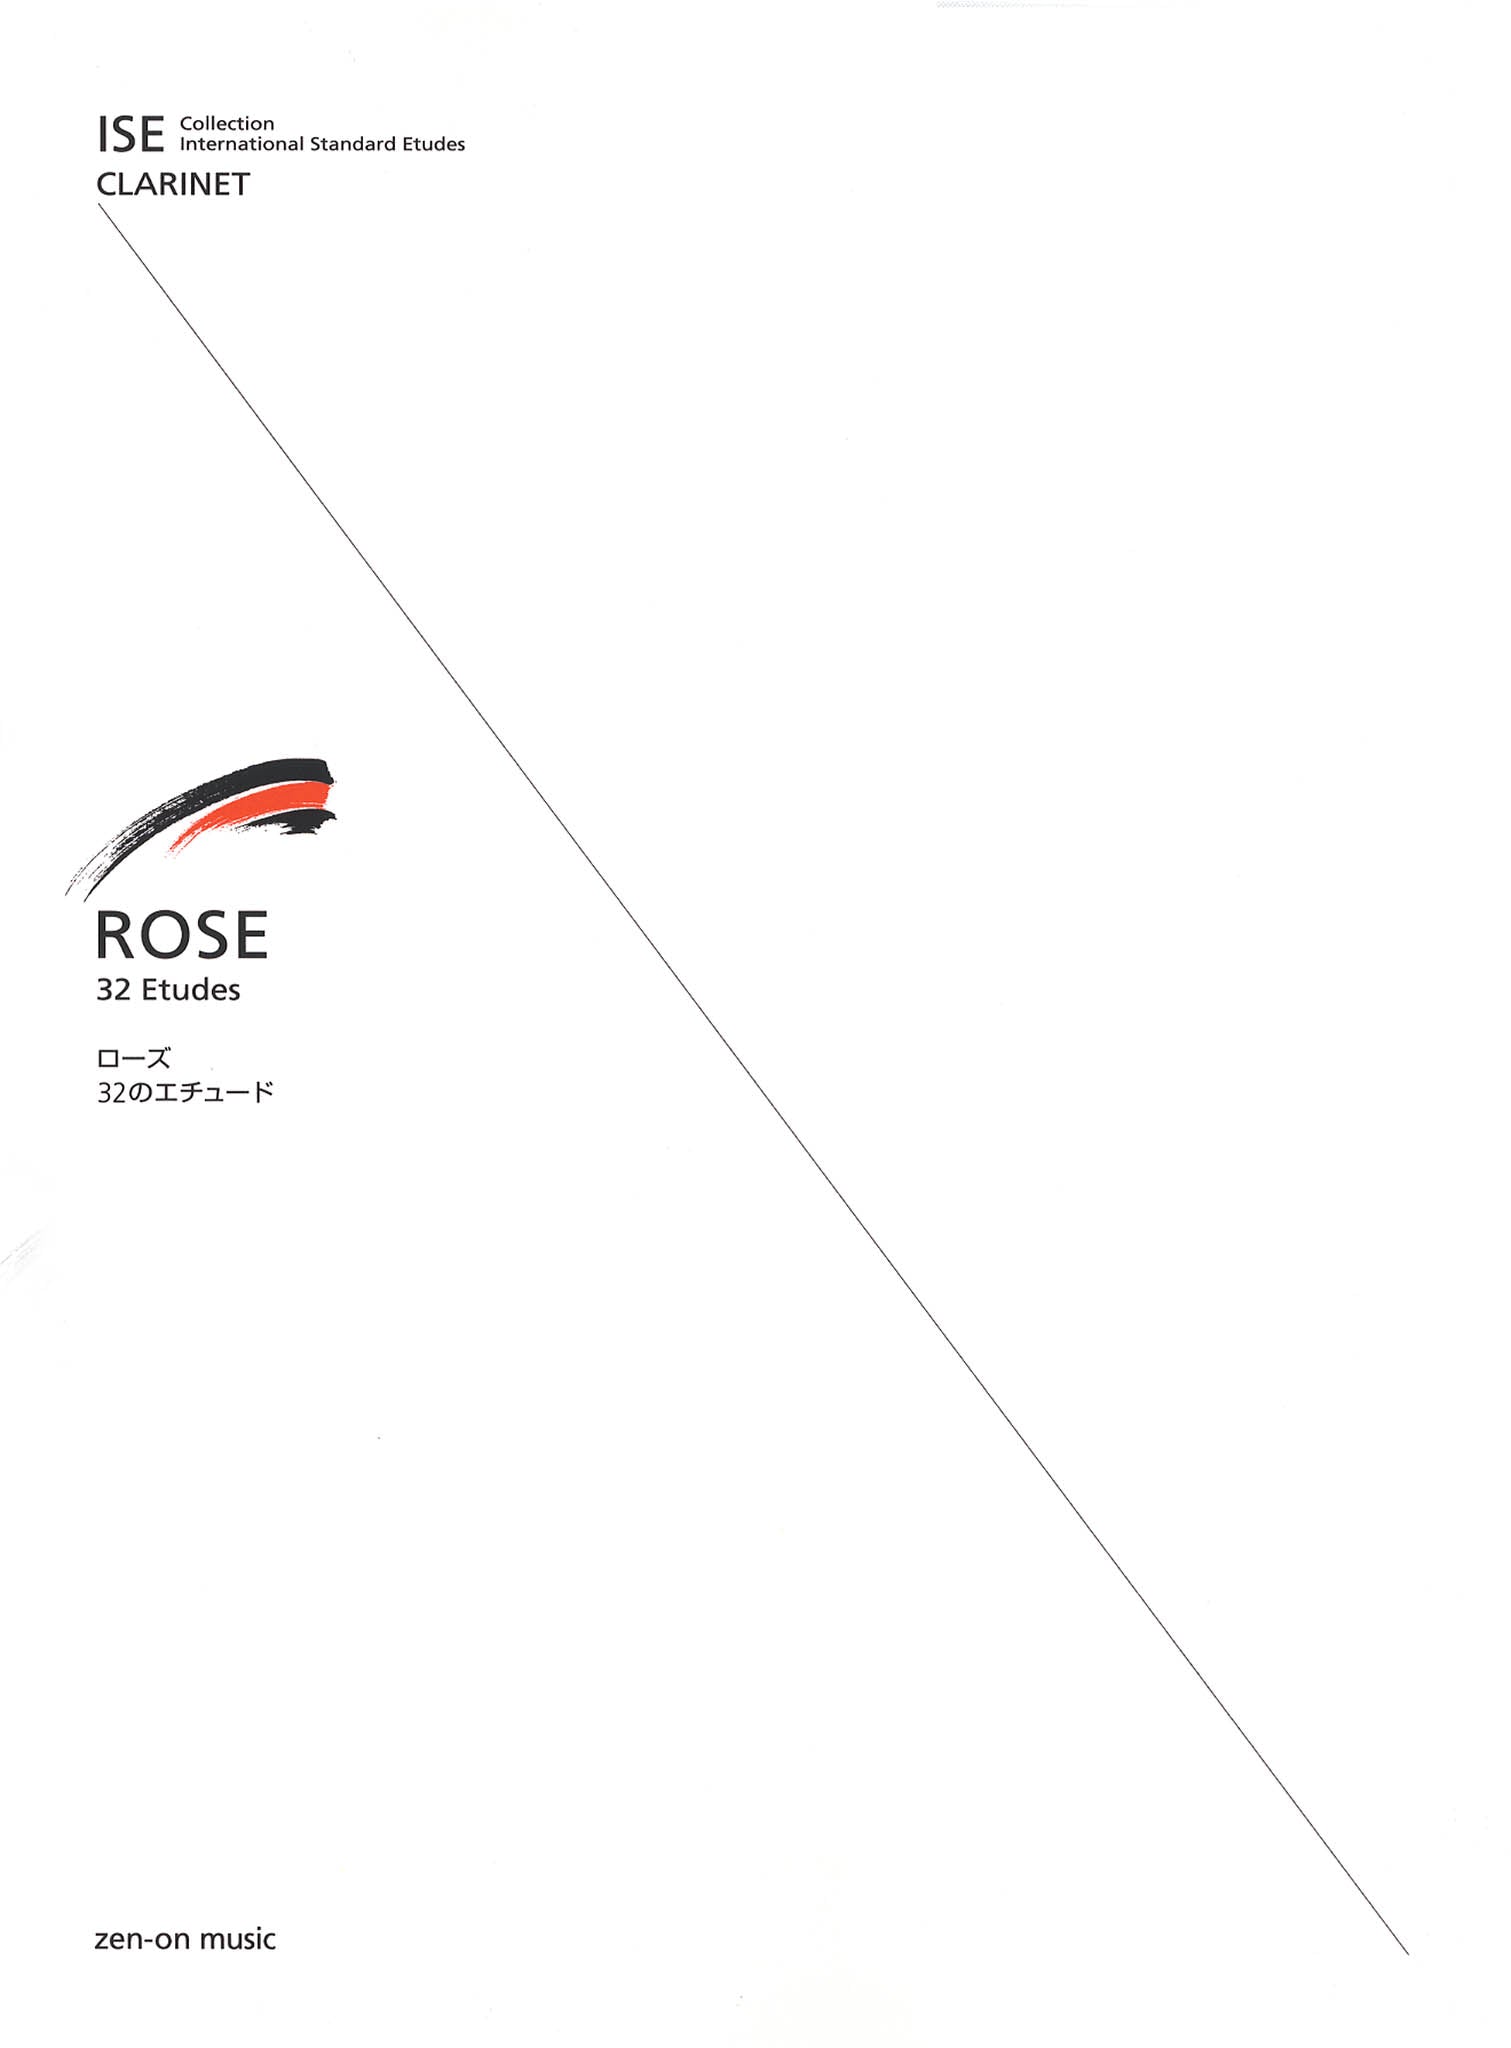 Rose 32 Études for Clarinet Cover